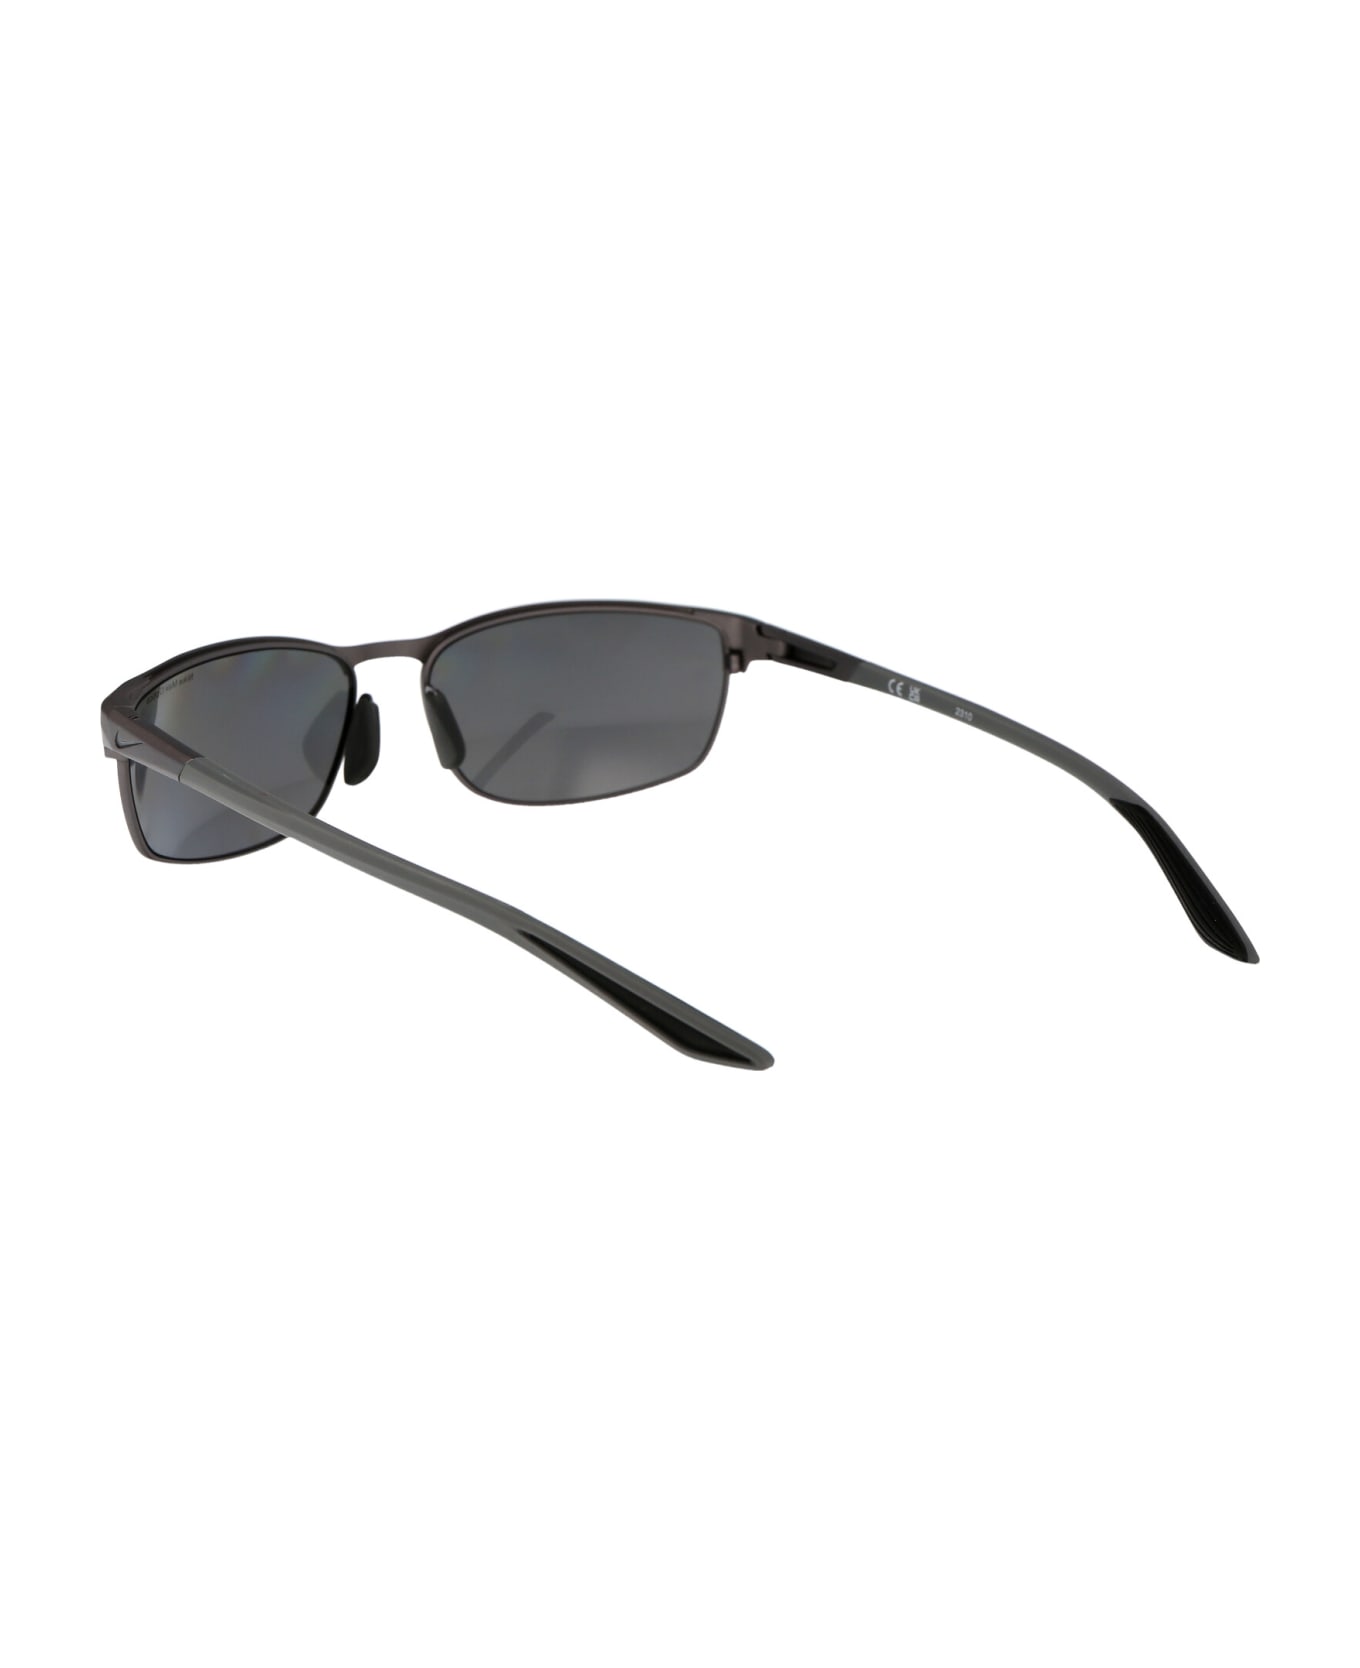 Nike Modern Metal Sunglasses - 918 GREY W/ SILVER FLASH SATIN GUNMETAL サングラス